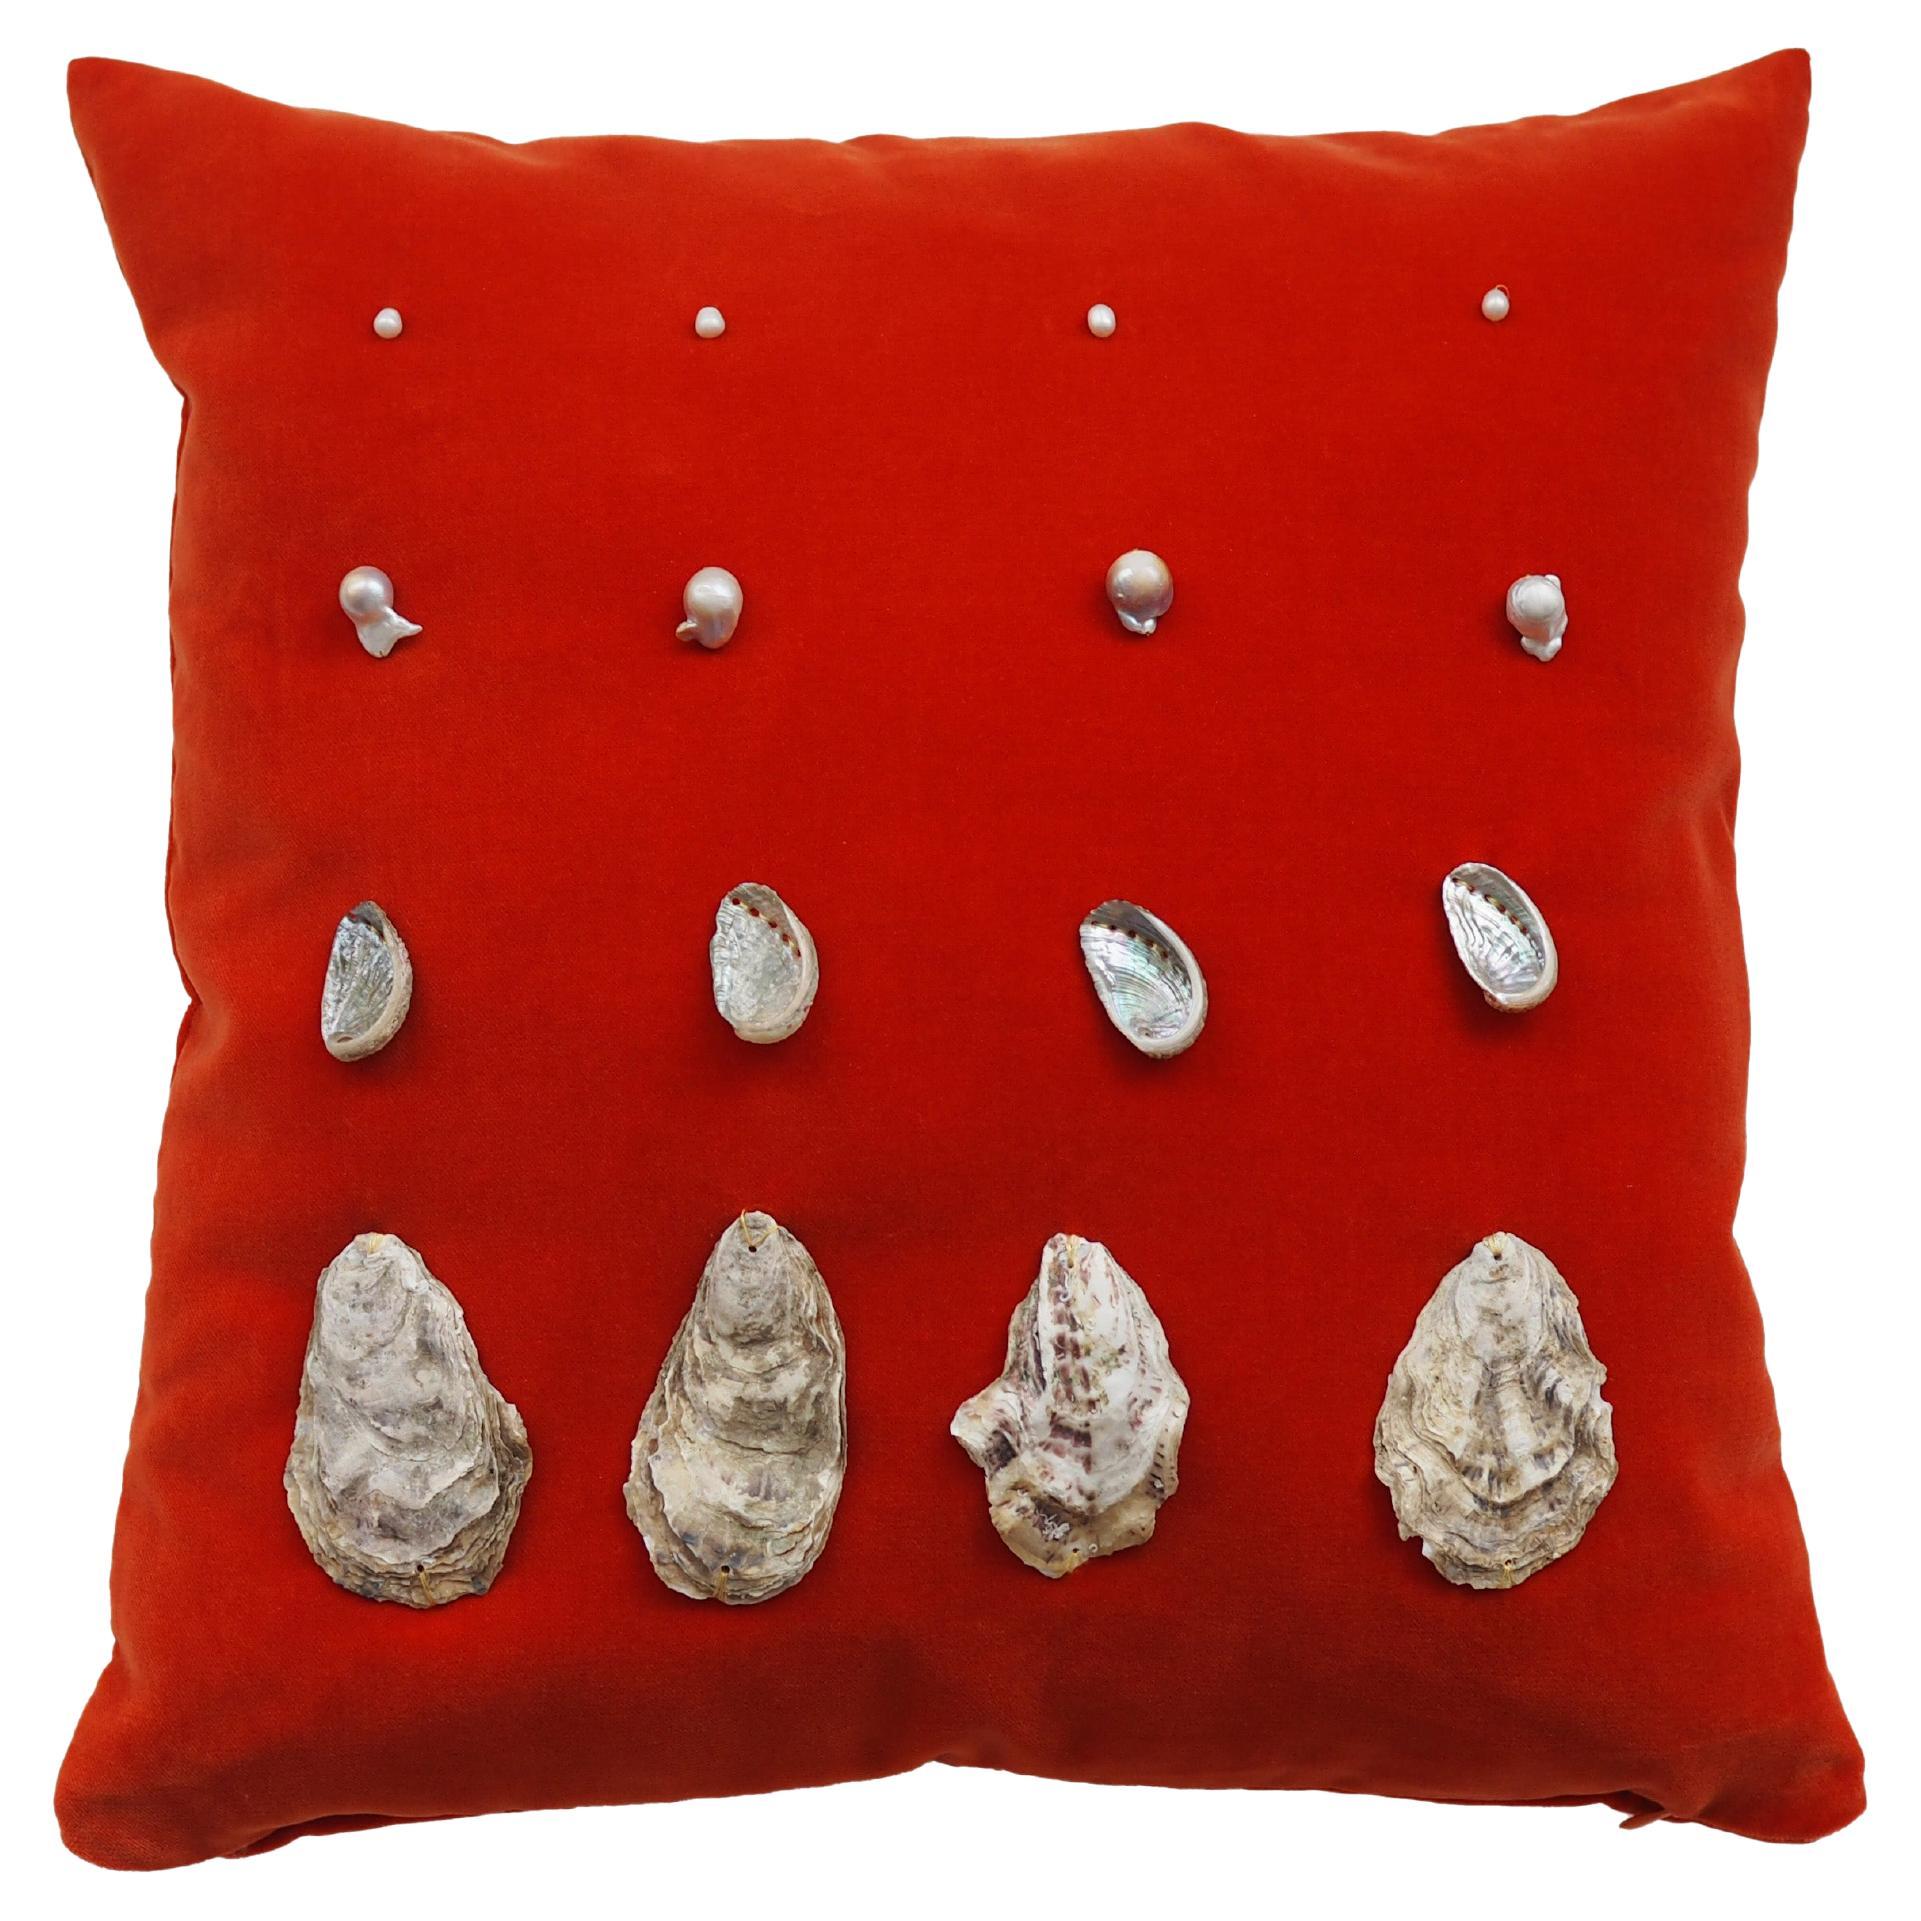 Bon Appetit 007 Decorative Cushion Culto Ponsoda 21st century desingn For Sale